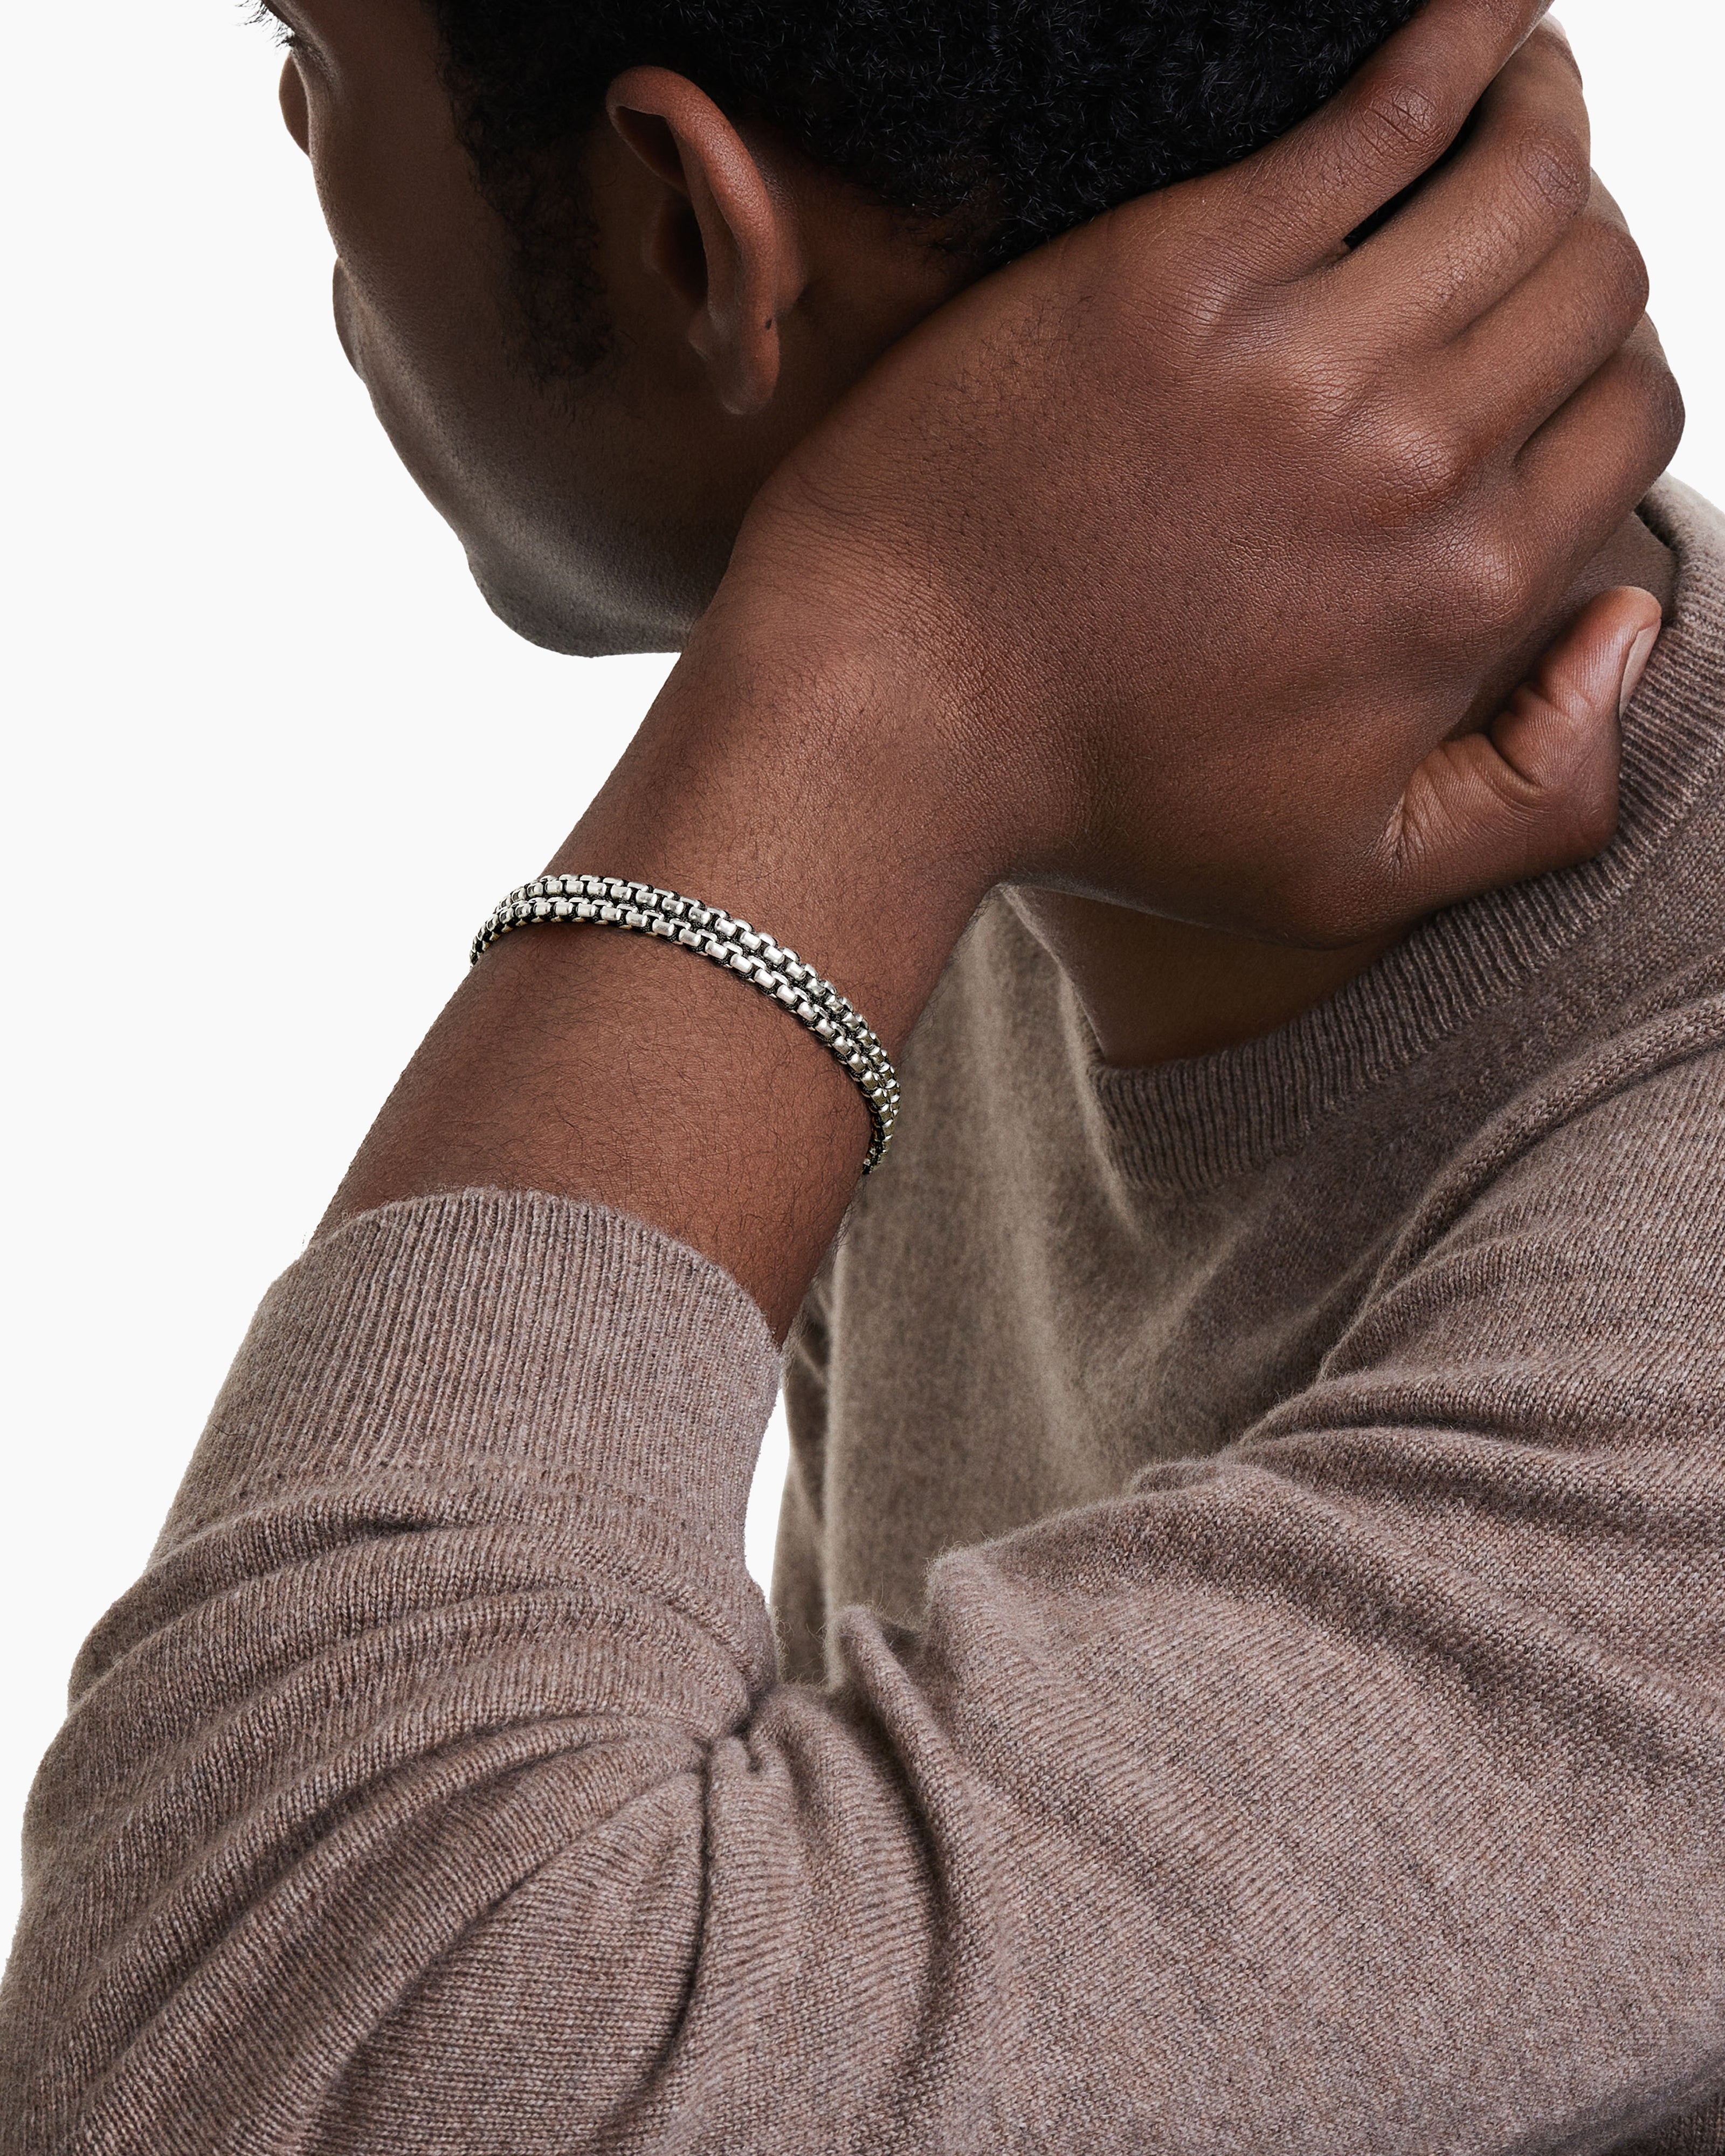 David Yurman Men's Box Chain Bracelet in Silver, 5mm, Size 8